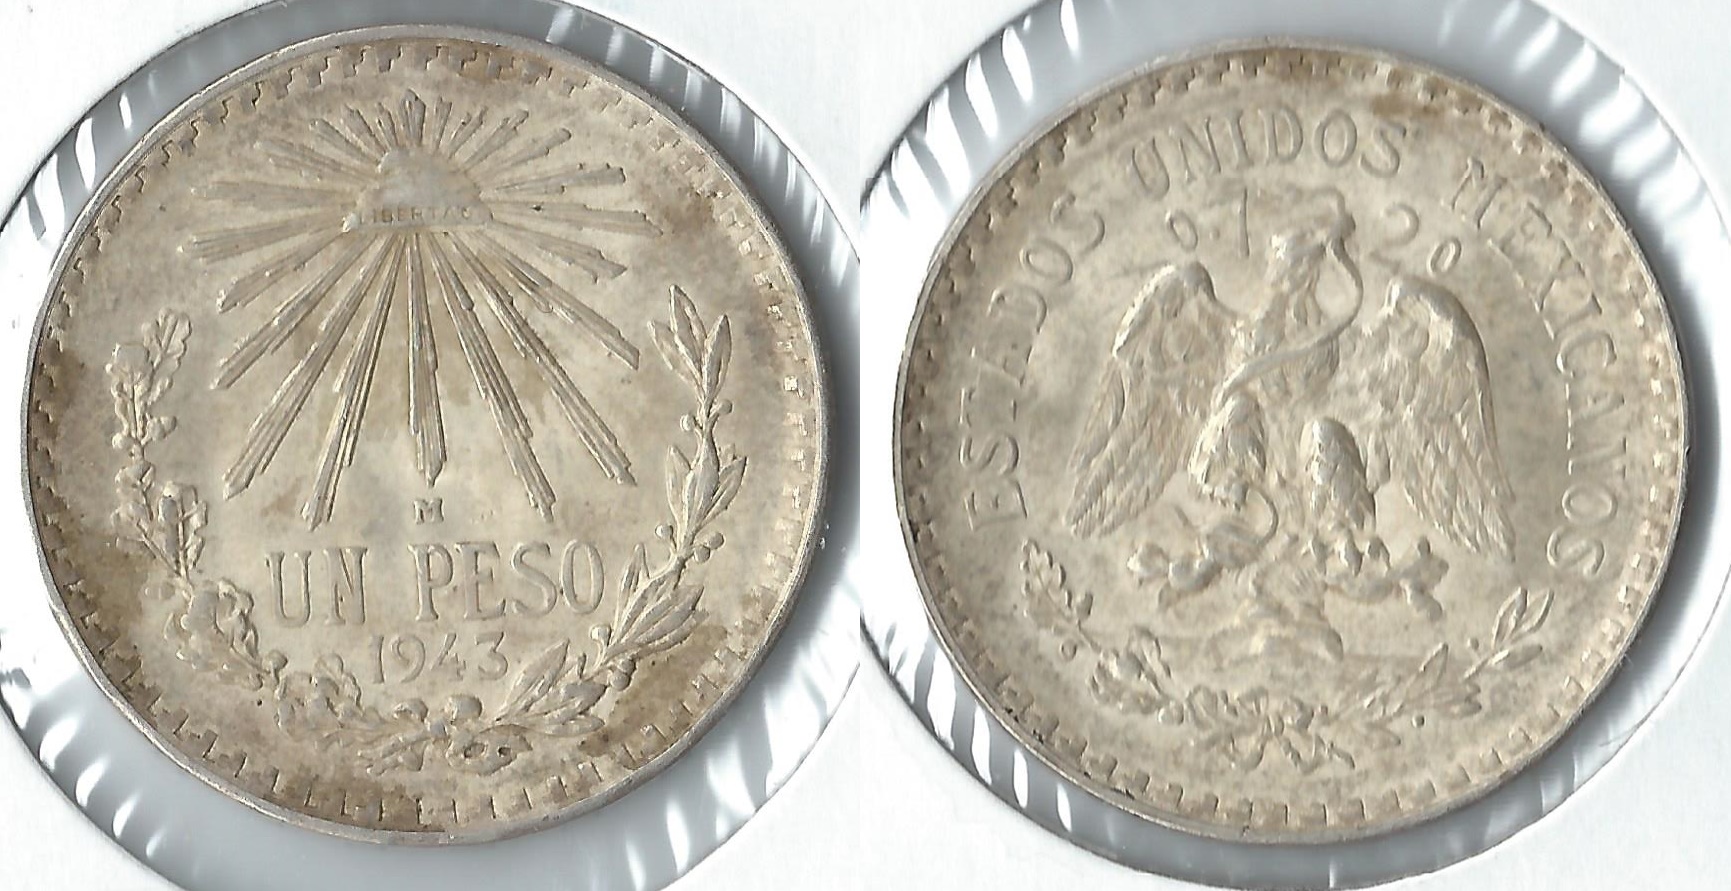 1943 mexico 1 peso.jpg